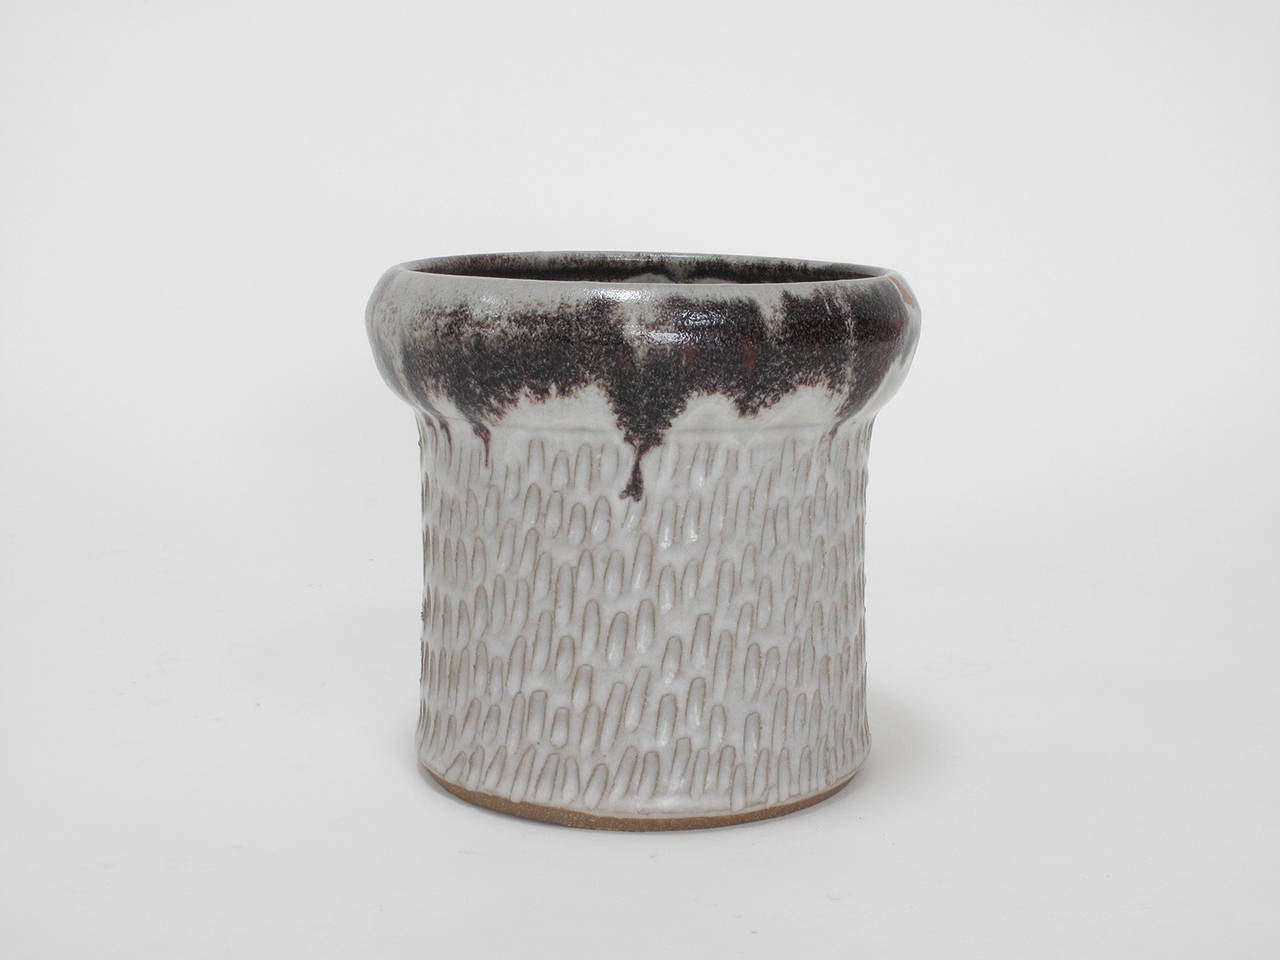 Hand thrown glazed pottery, planter or flower pot in the style of Earthgender Ceramics, California Modern, 1960s.